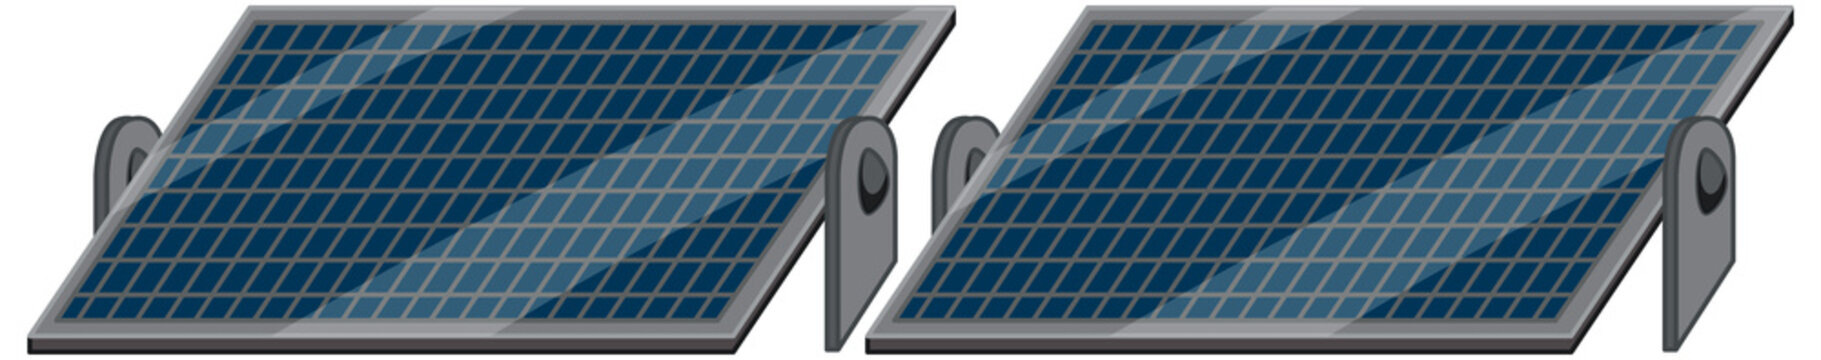 Solar cell panels on white background